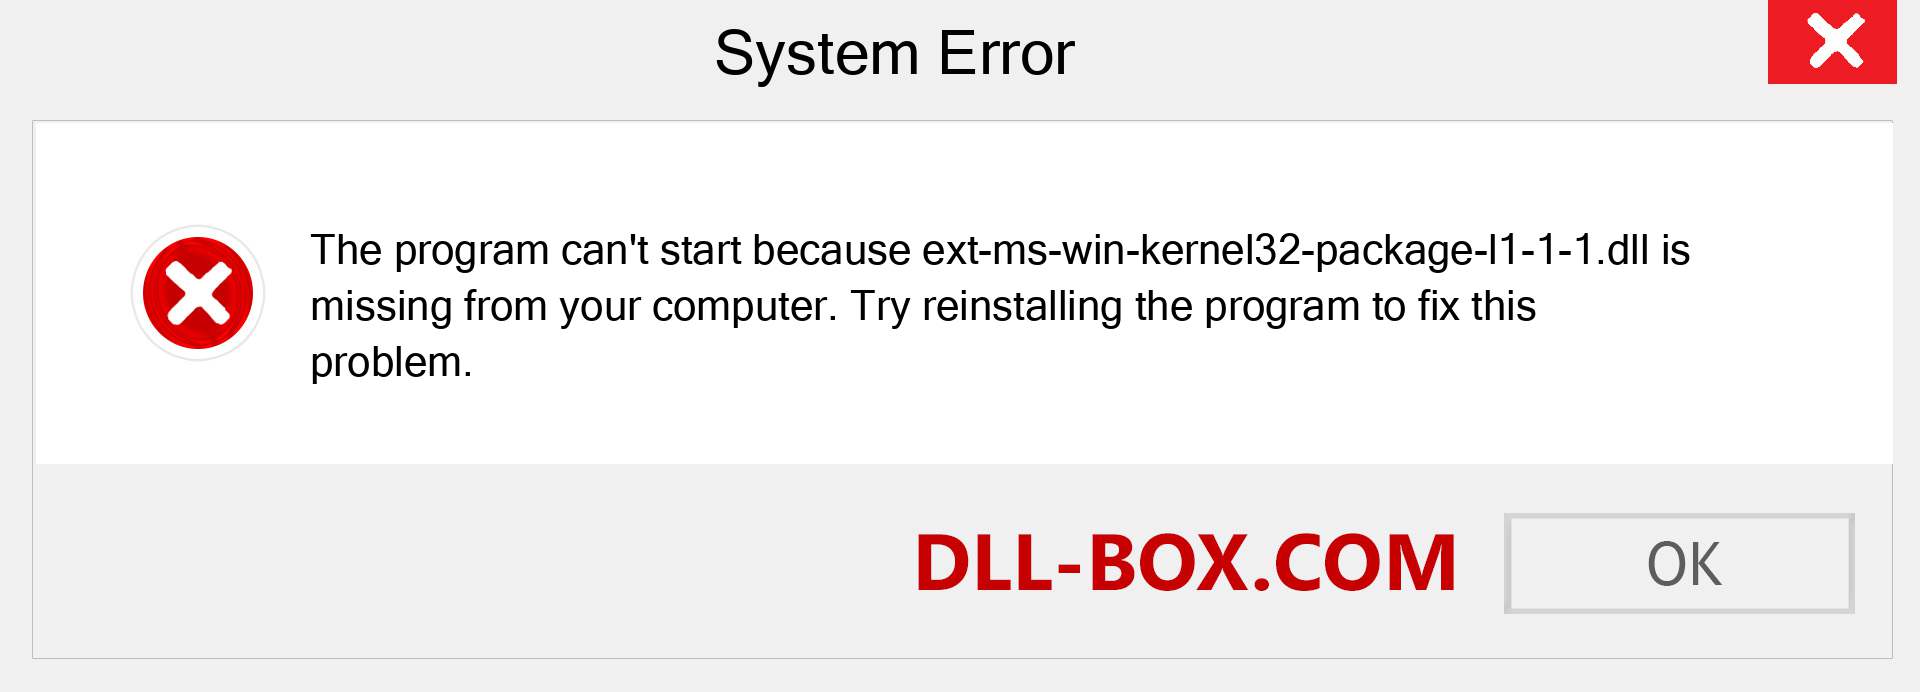  ext-ms-win-kernel32-package-l1-1-1.dll file is missing?. Download for Windows 7, 8, 10 - Fix  ext-ms-win-kernel32-package-l1-1-1 dll Missing Error on Windows, photos, images